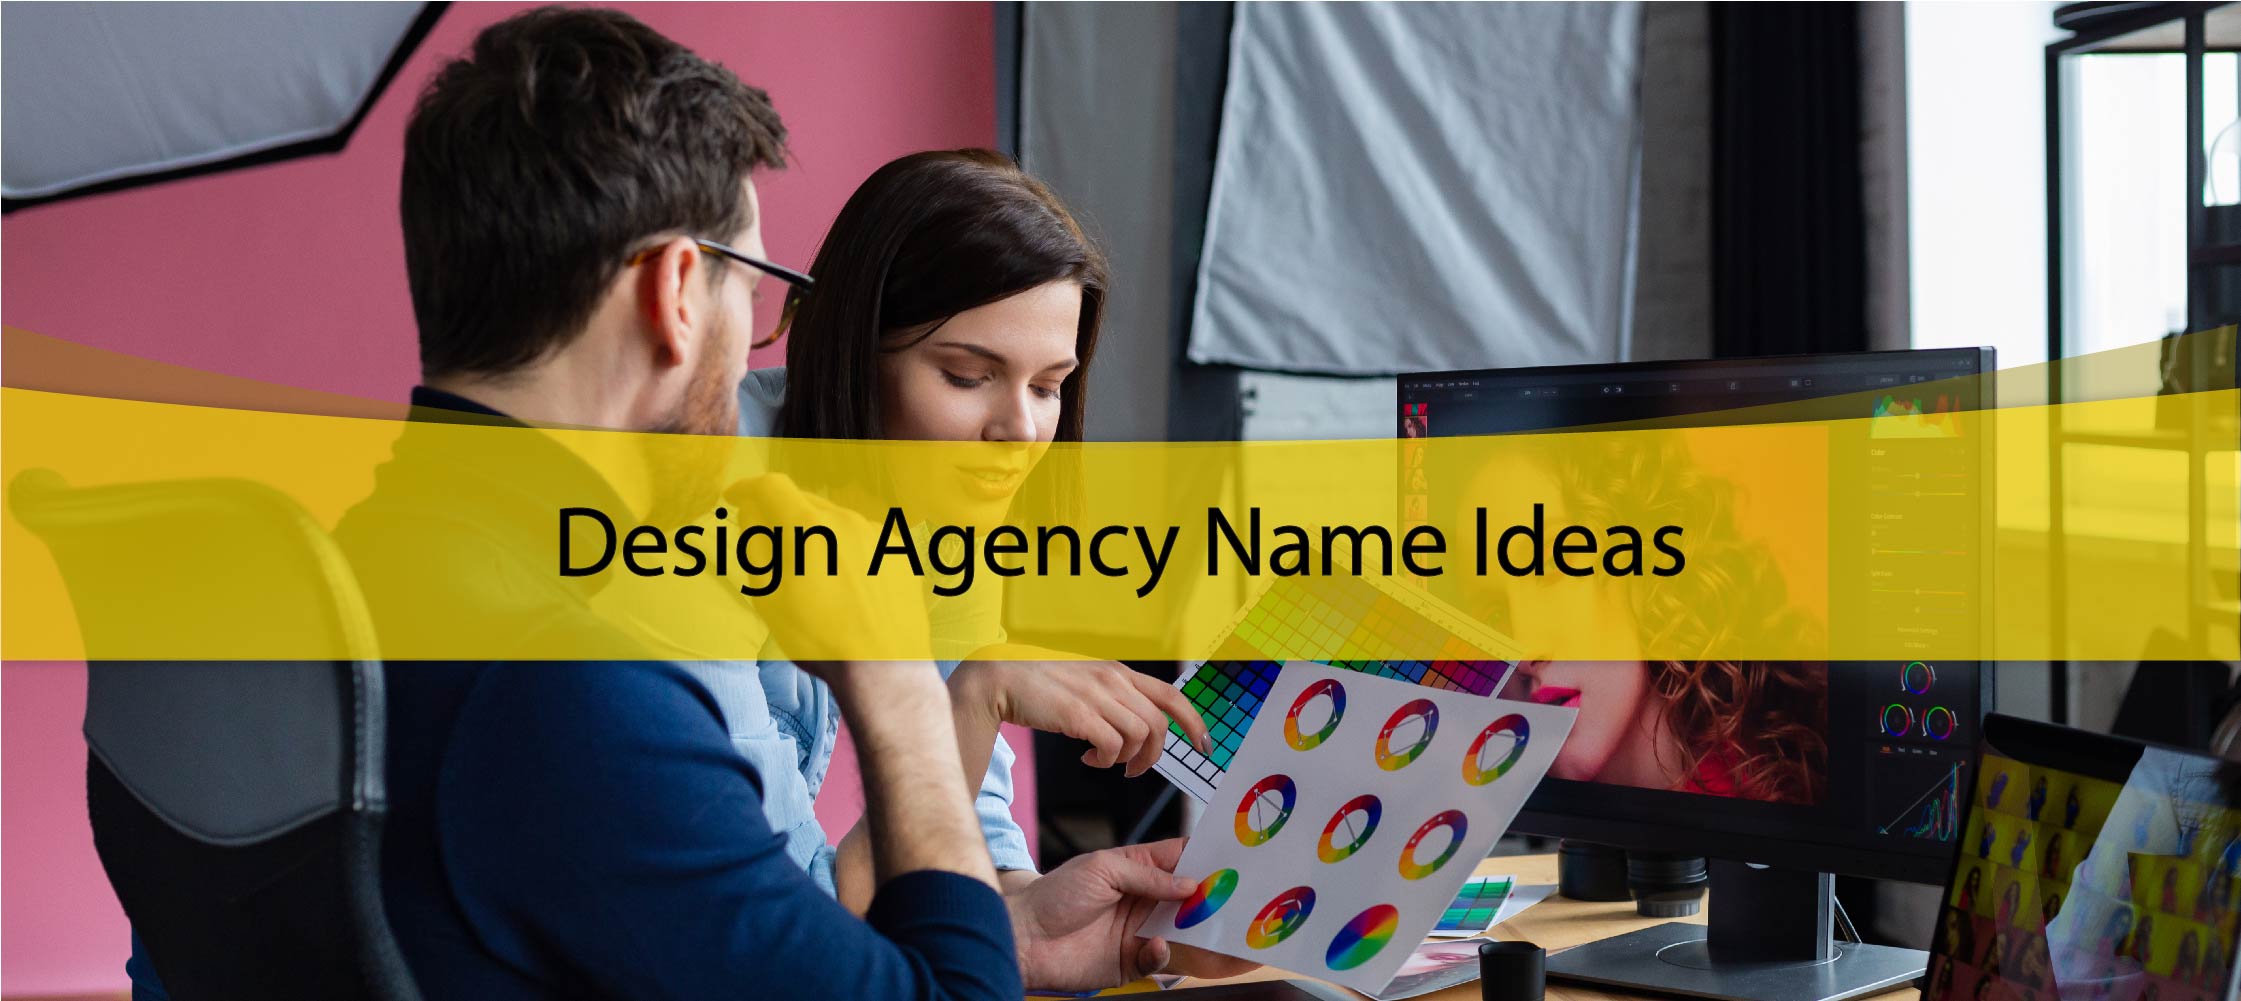 Design Agency Name Ideas